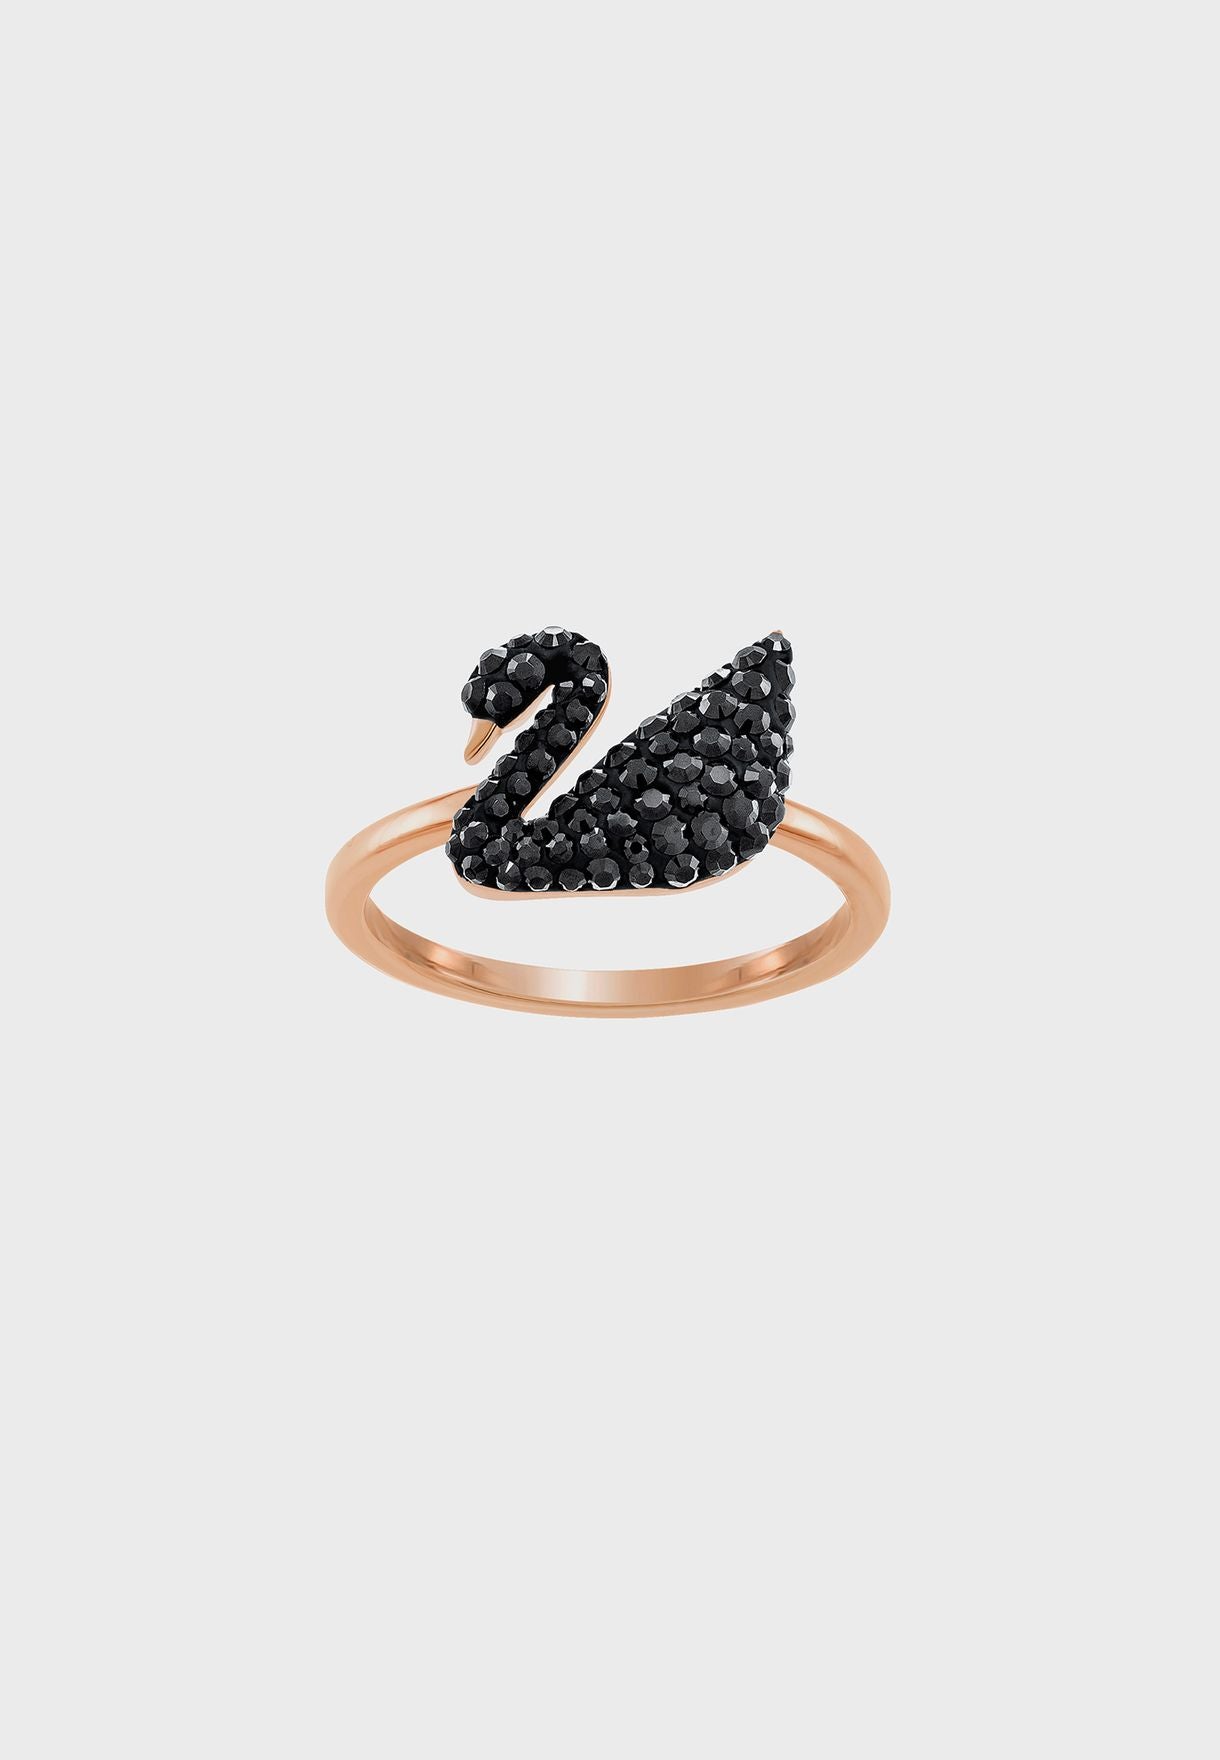 SWAROVSKI Iconic Swan Ring - Size 52 #5366585